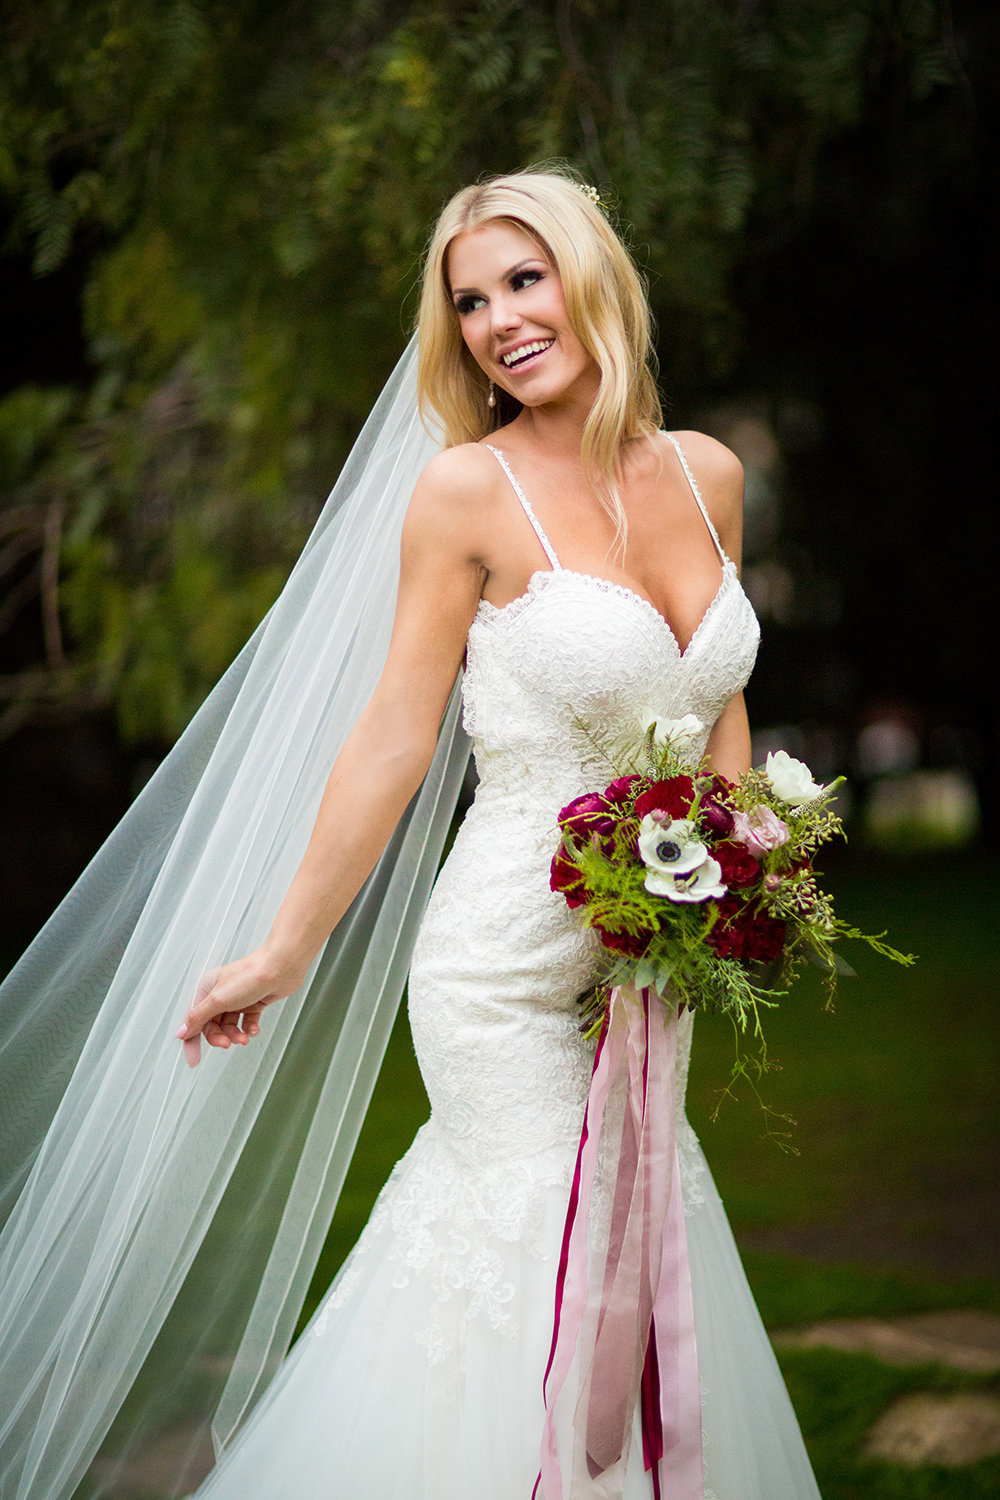 Green Gables wedding photos stunning bridal image